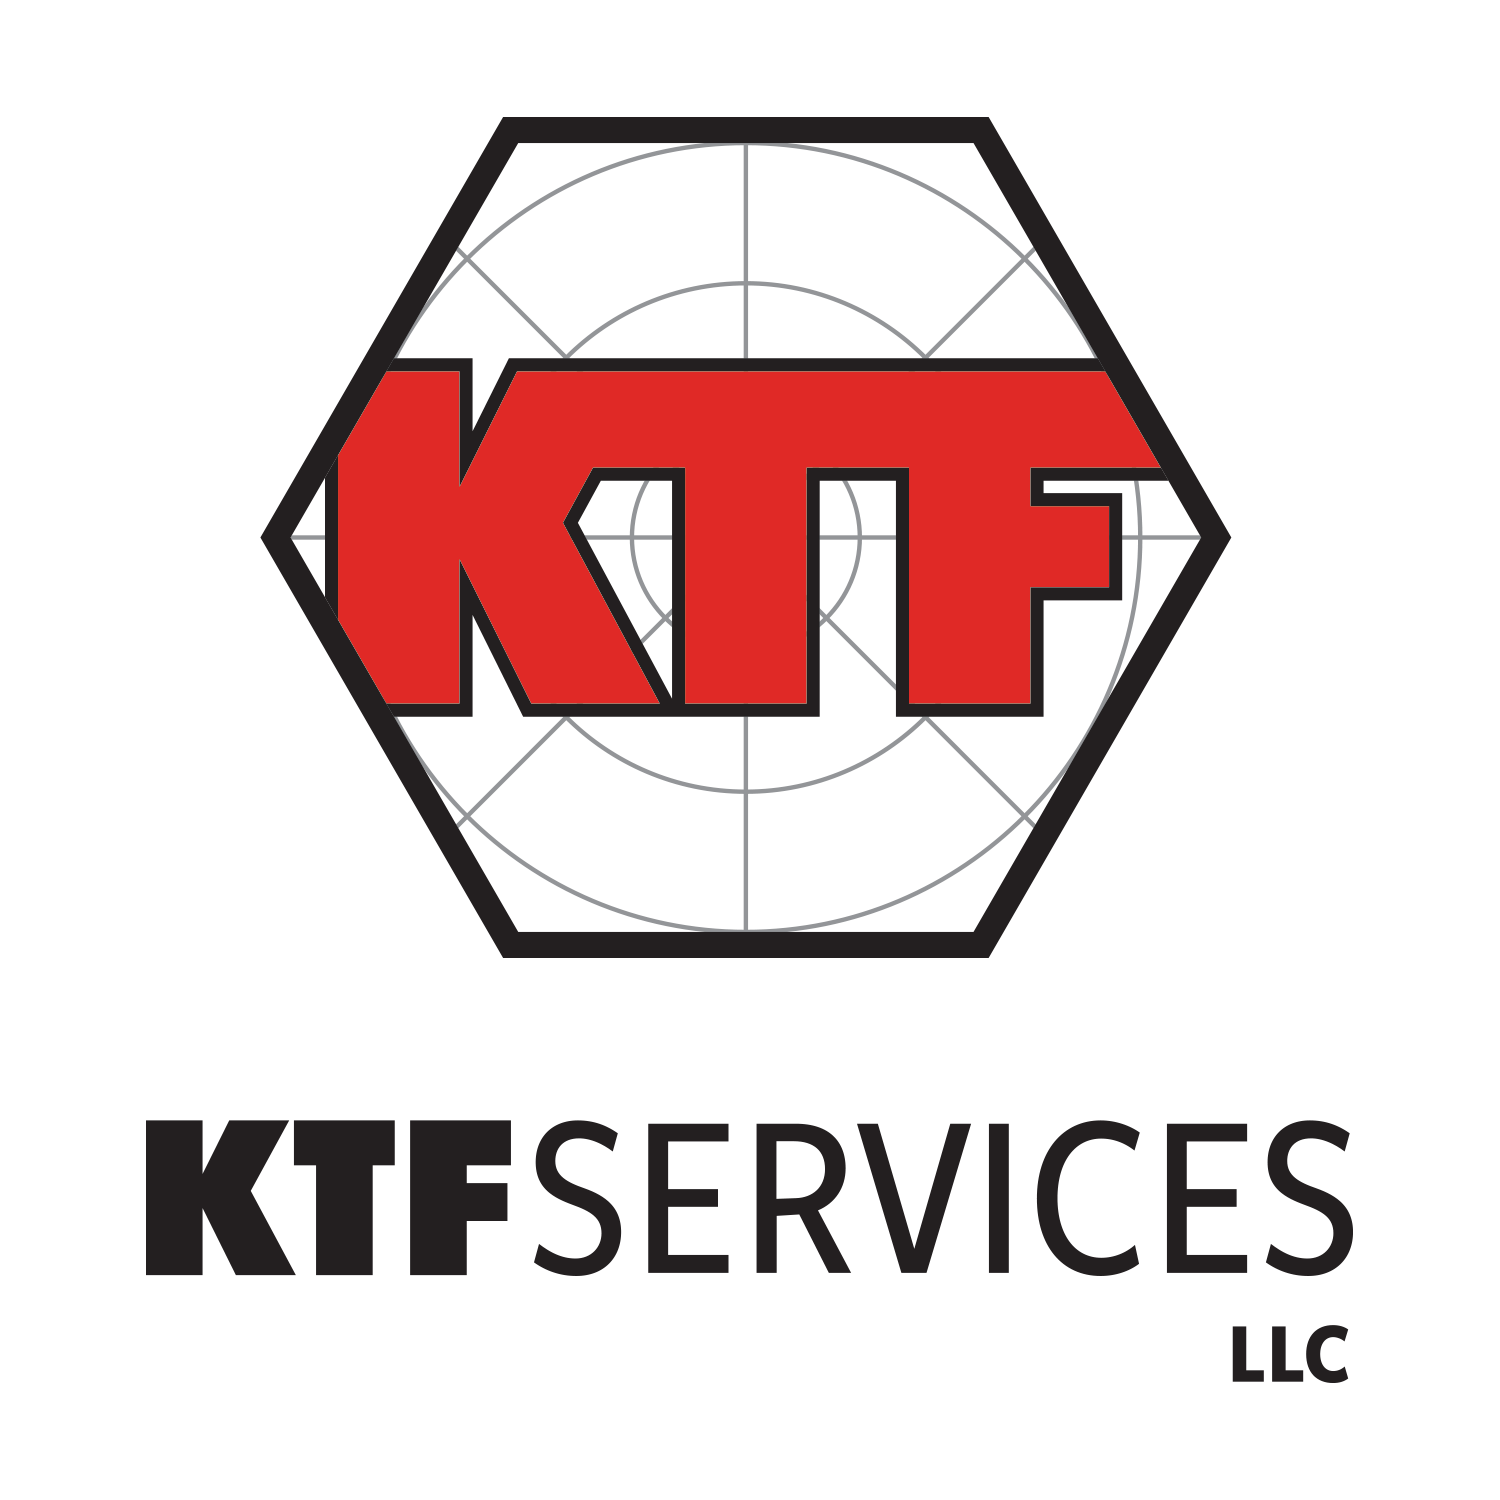 KTF Services logo